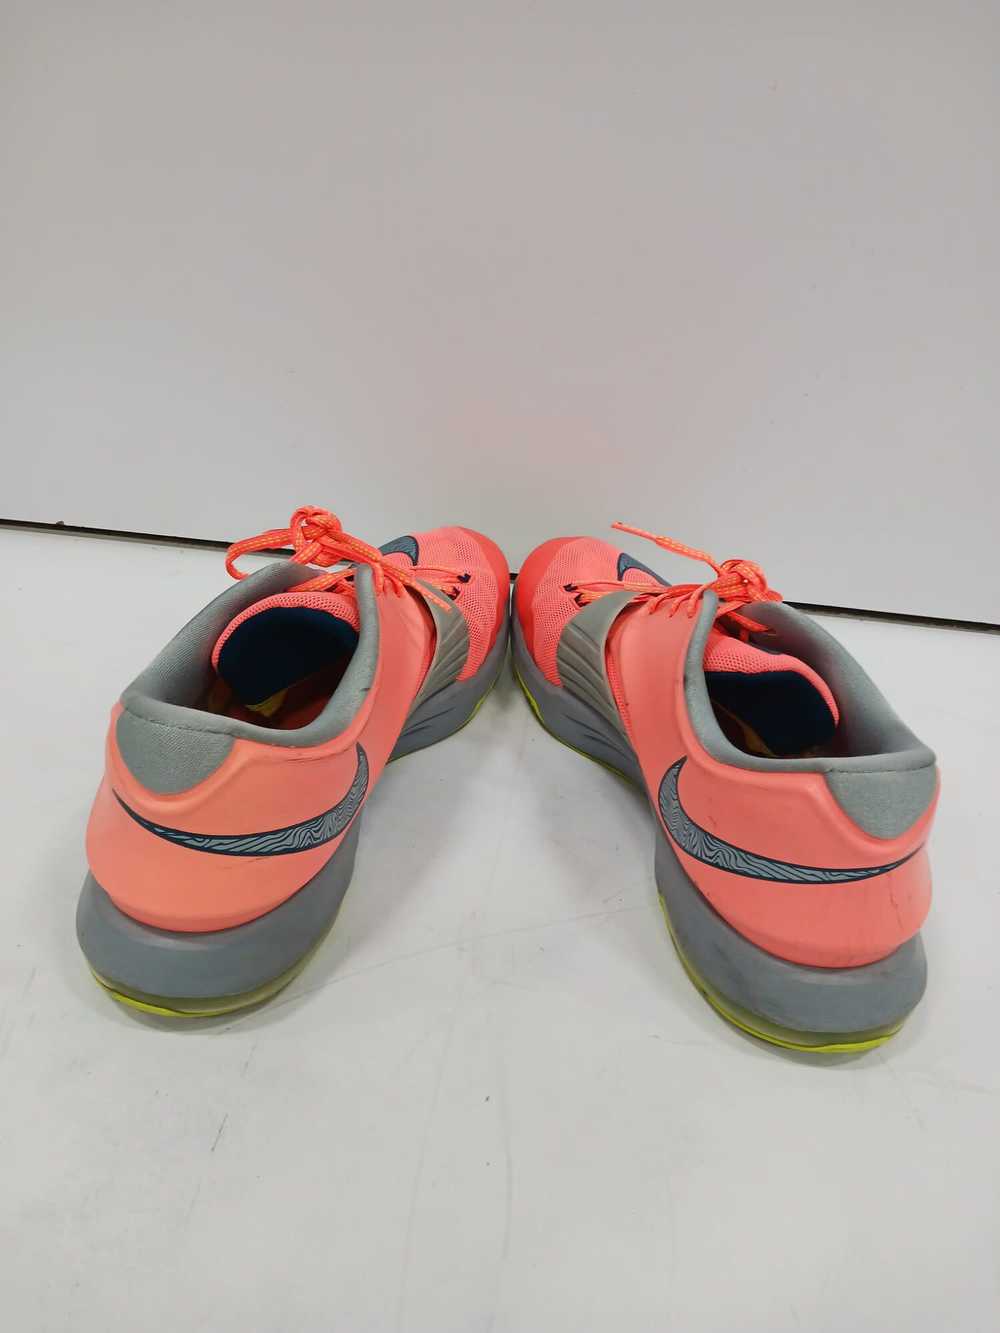 Men's Nike KD 7 Sneakers Sz 13 - image 3